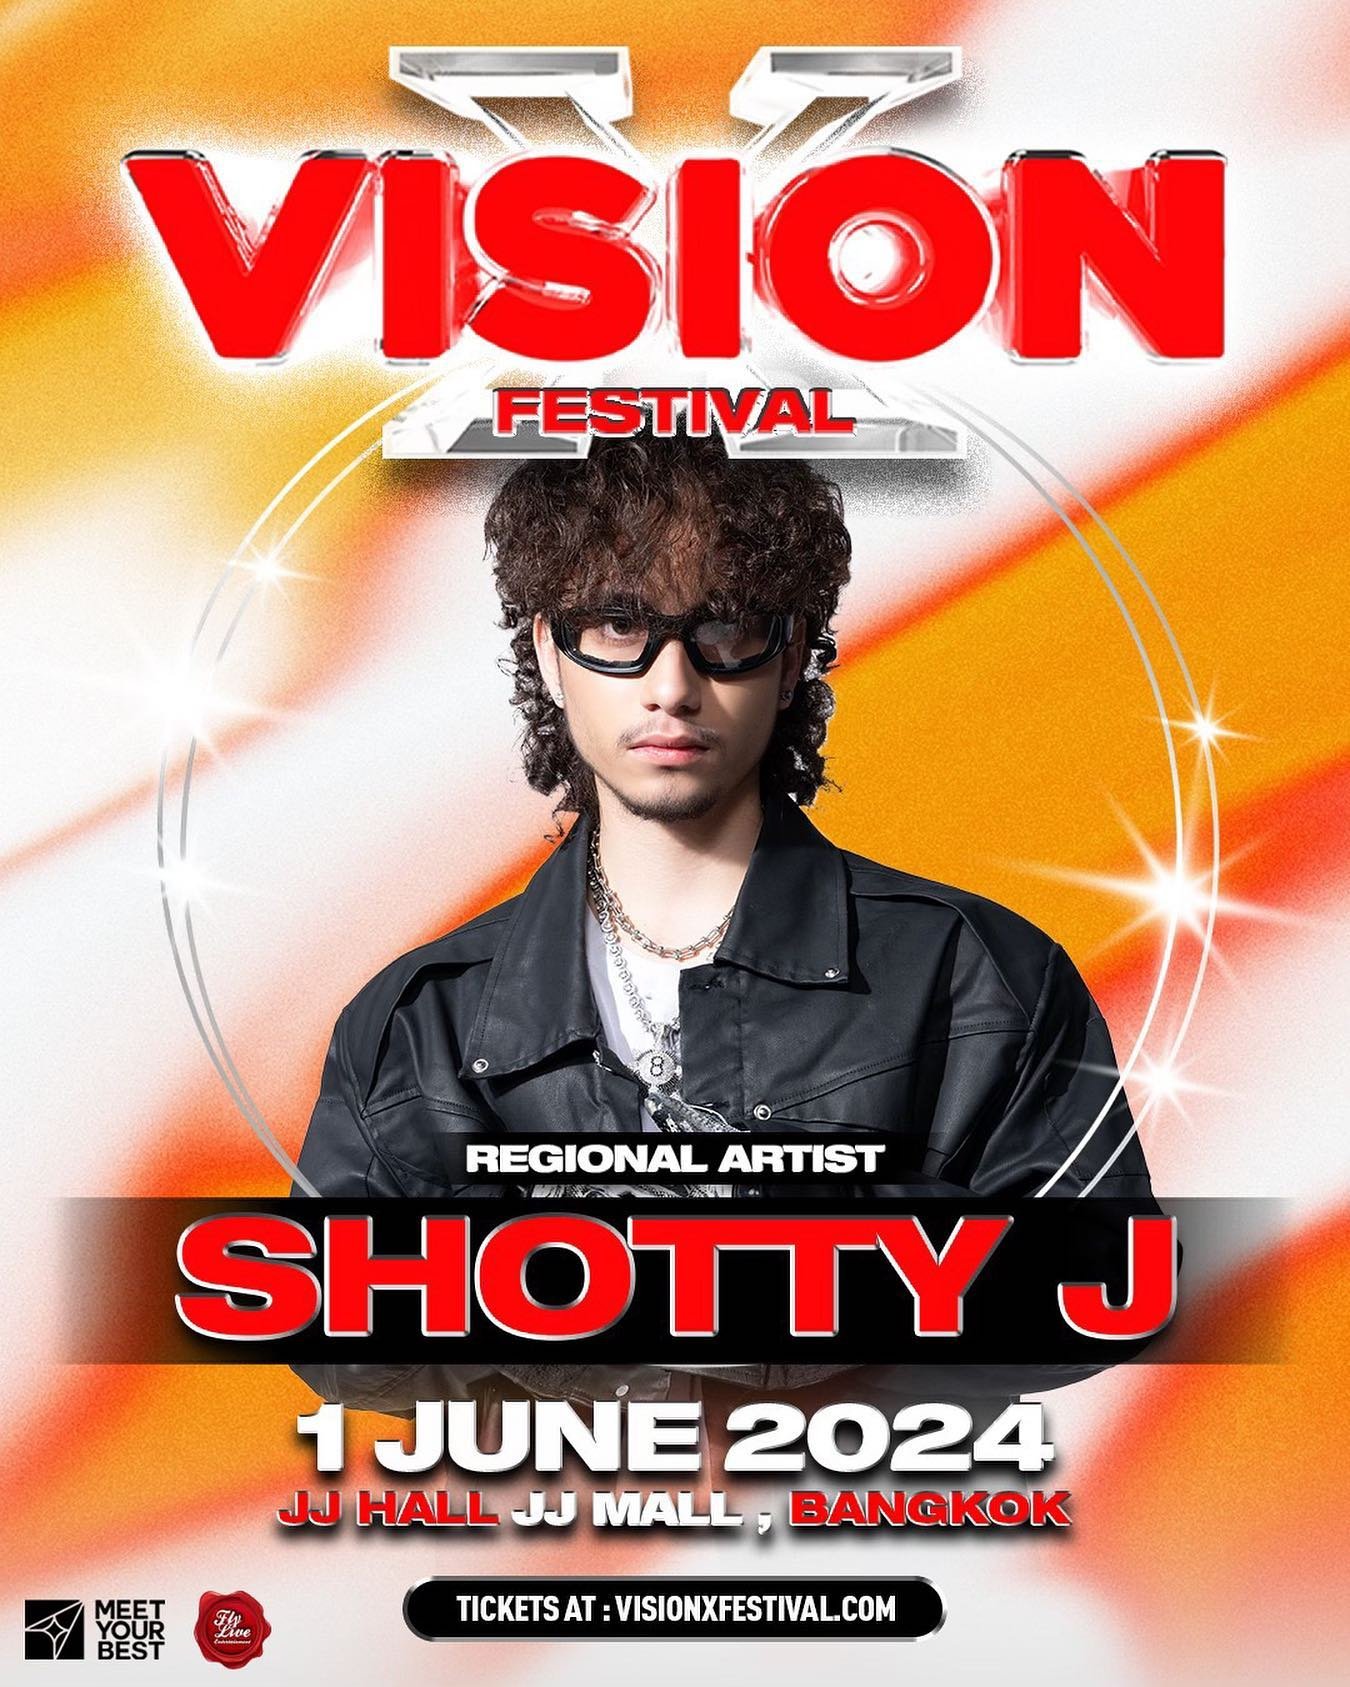 WELCOME SHOTTY J 🇹🇭🔥
ANOTHER THAI ARTIST FROM HYPE TRAIN 🚂💨

ยินดีต้อนรับศิลปินไทยอีกคนที่บนงาน VISION X เฟสติวัล 🇹🇭🔥
&lsquo;SHOTTY J&rsquo; จากค่าย HYPE TRAIN 🚂💨

TIER 2 TICKETS OPEN NOW 👇

Get tickets now 👉🏼 visionxfestival.com

DATE -